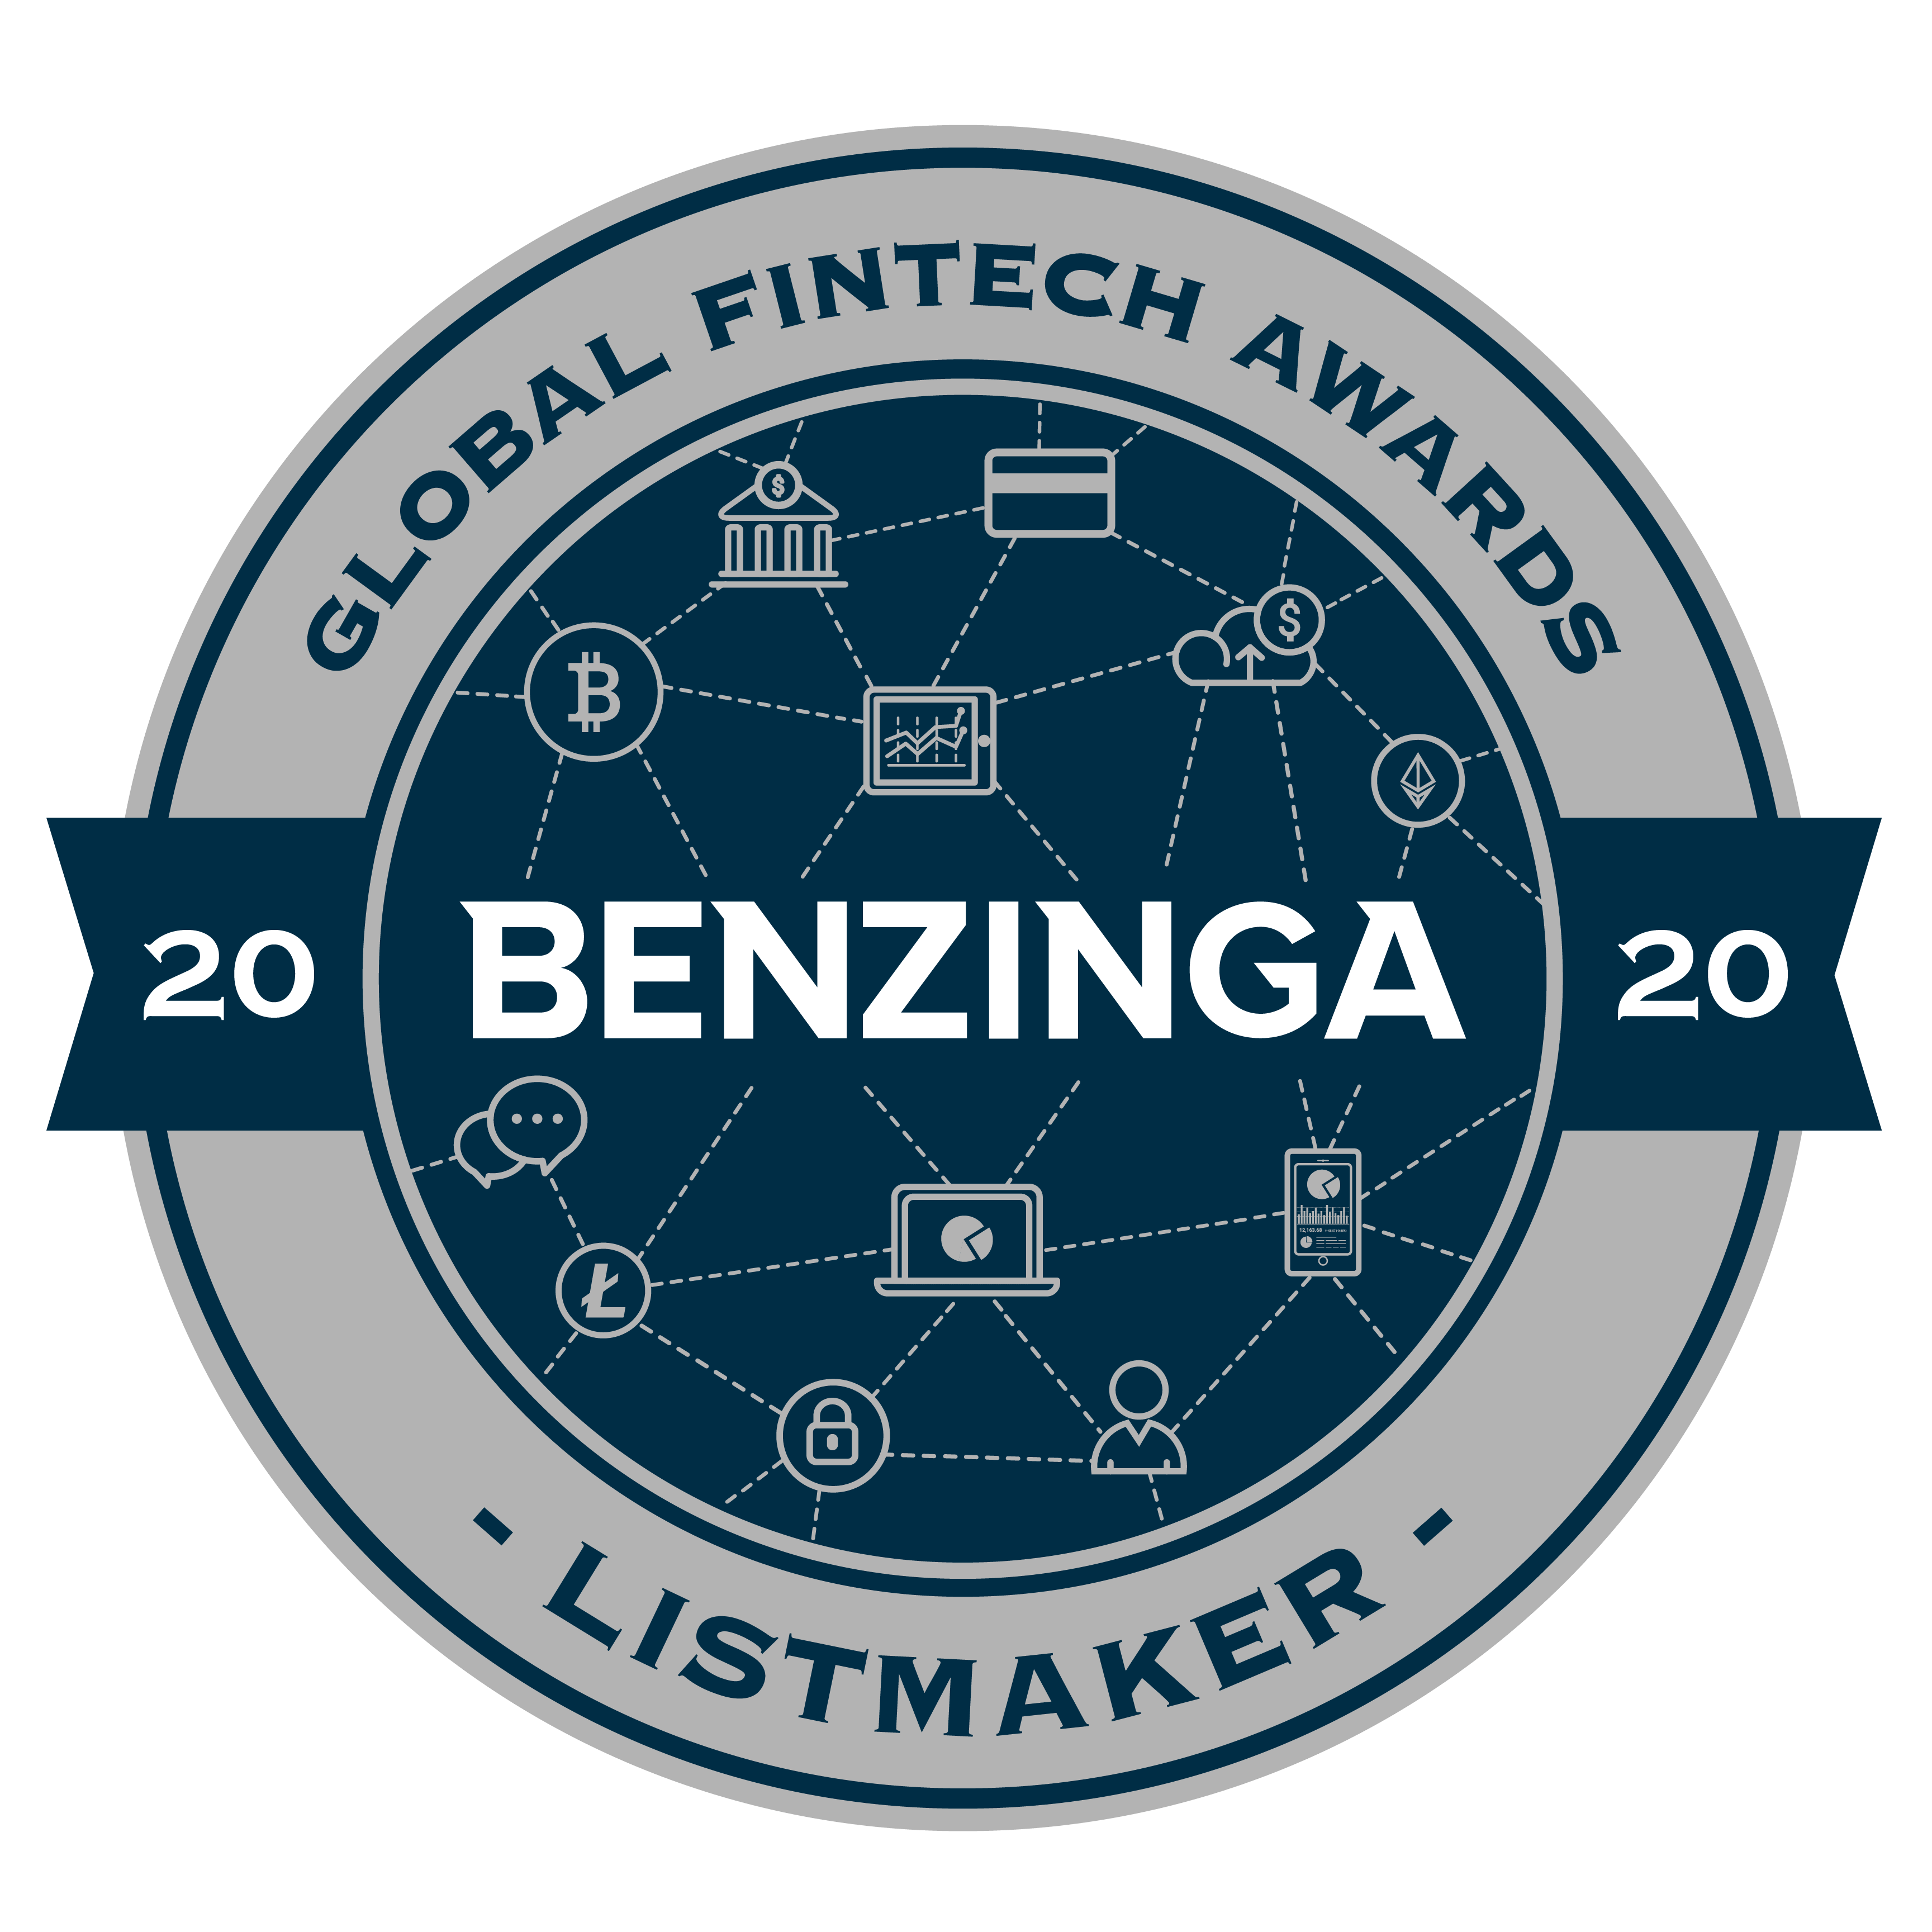 2020 Benzinga Global Fintech Awards - Listmaker Badge